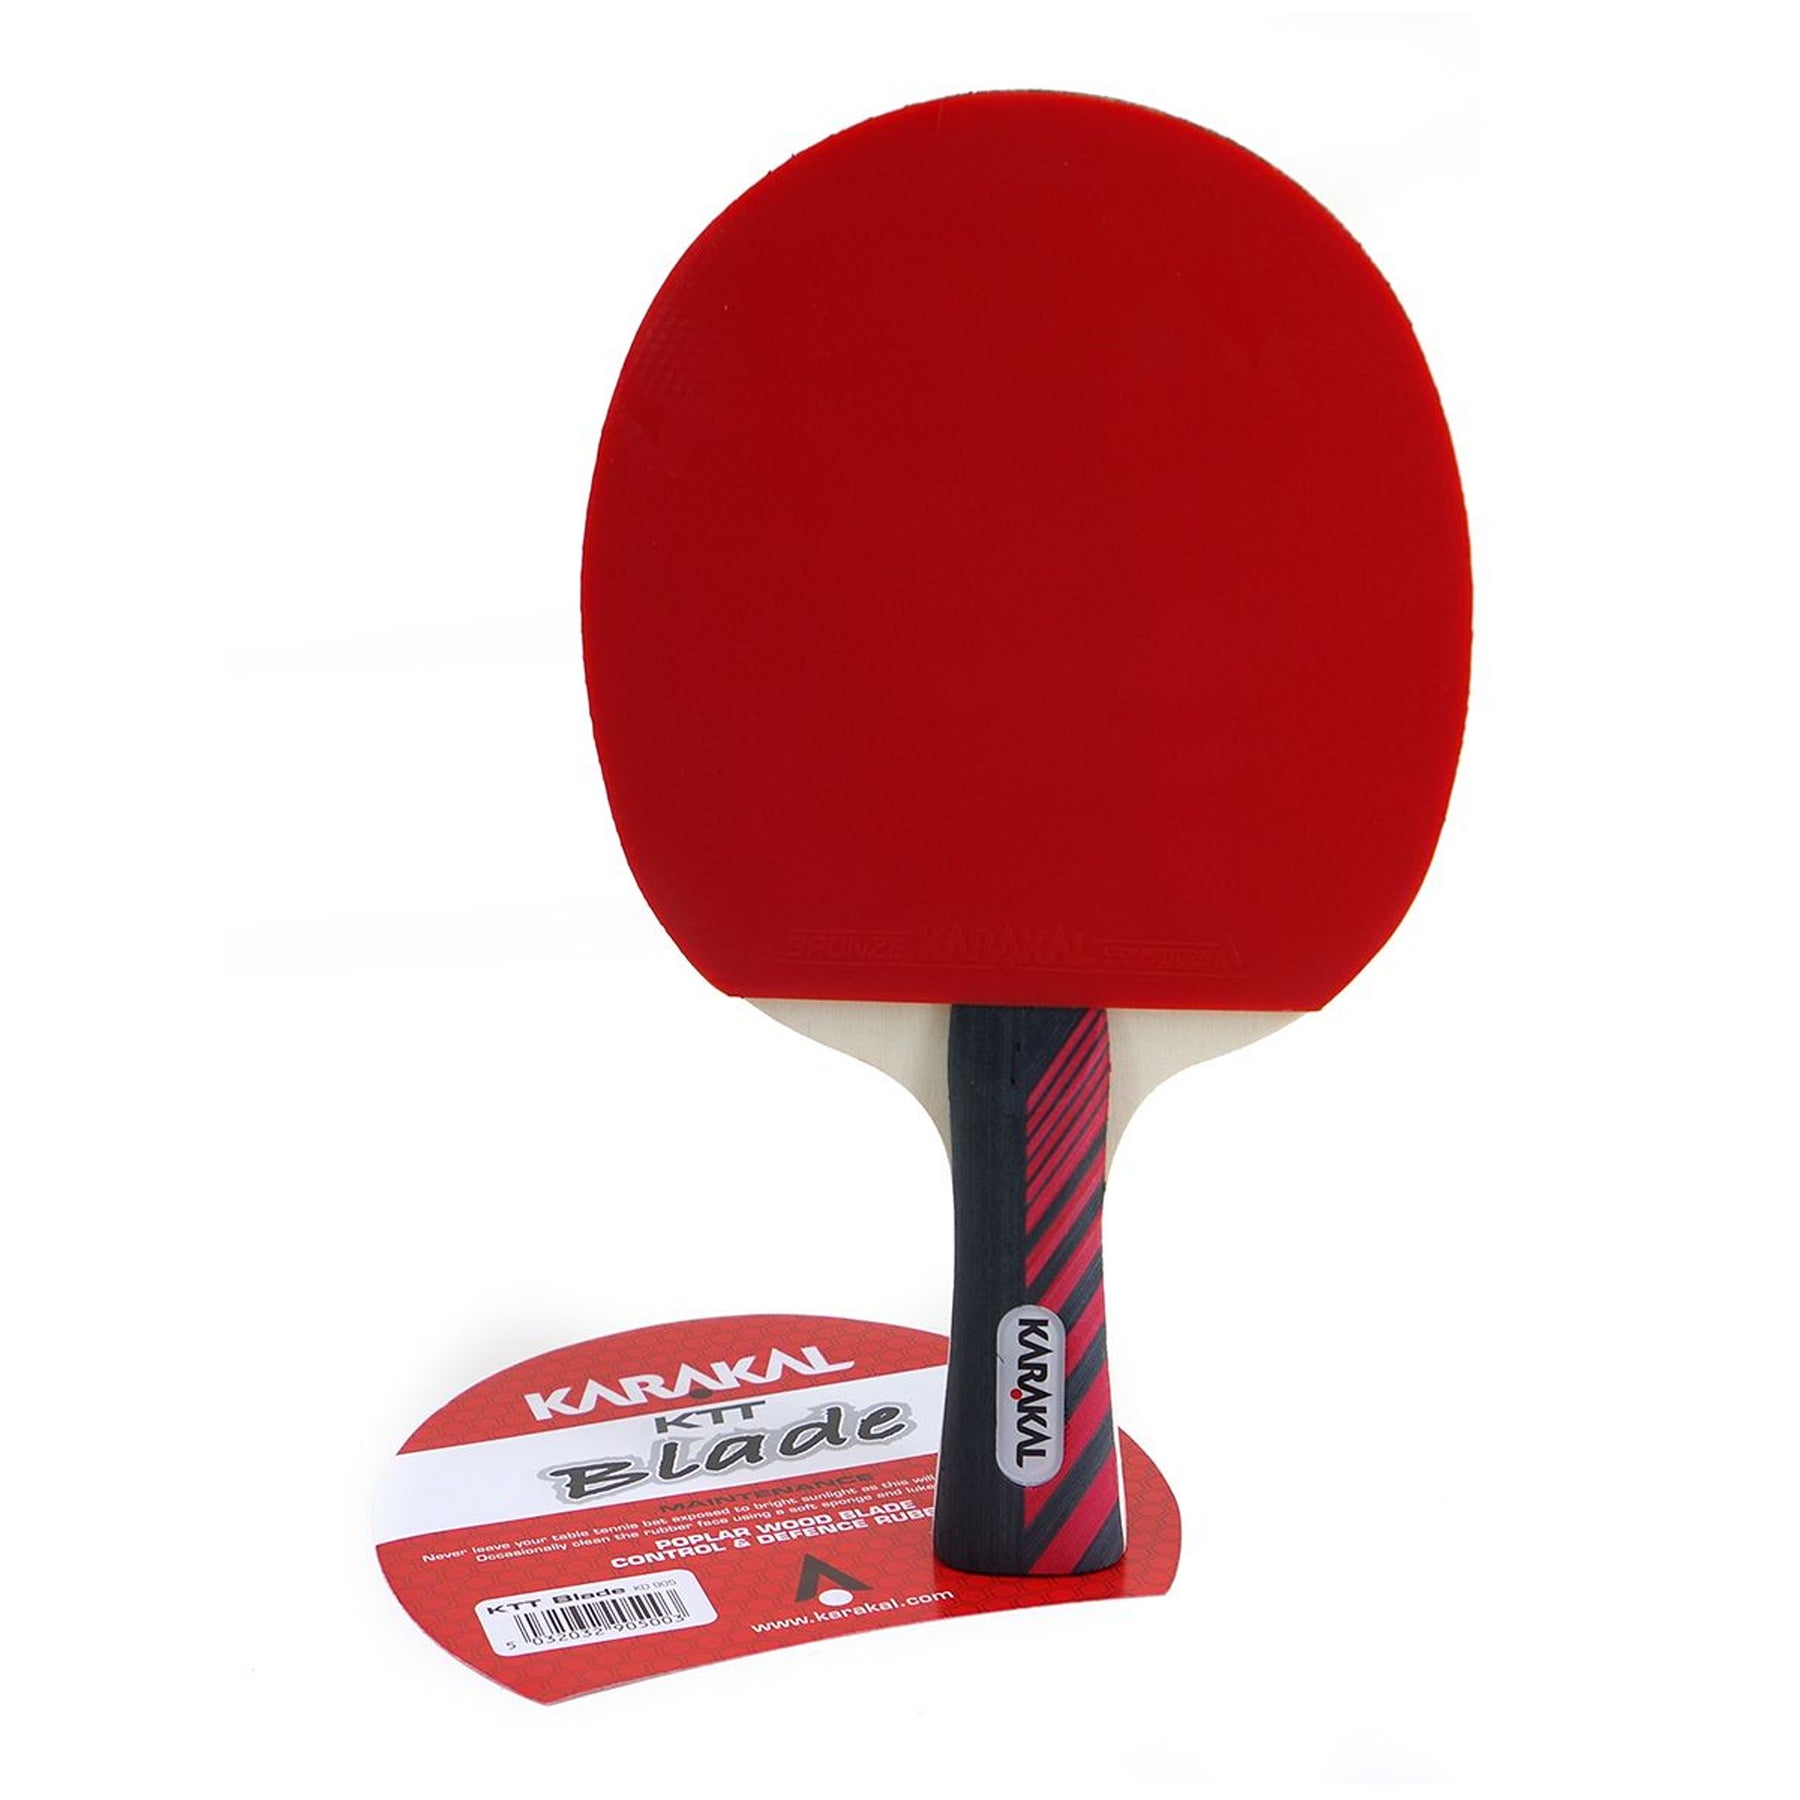 Karakal Blade Table Tennis Bat